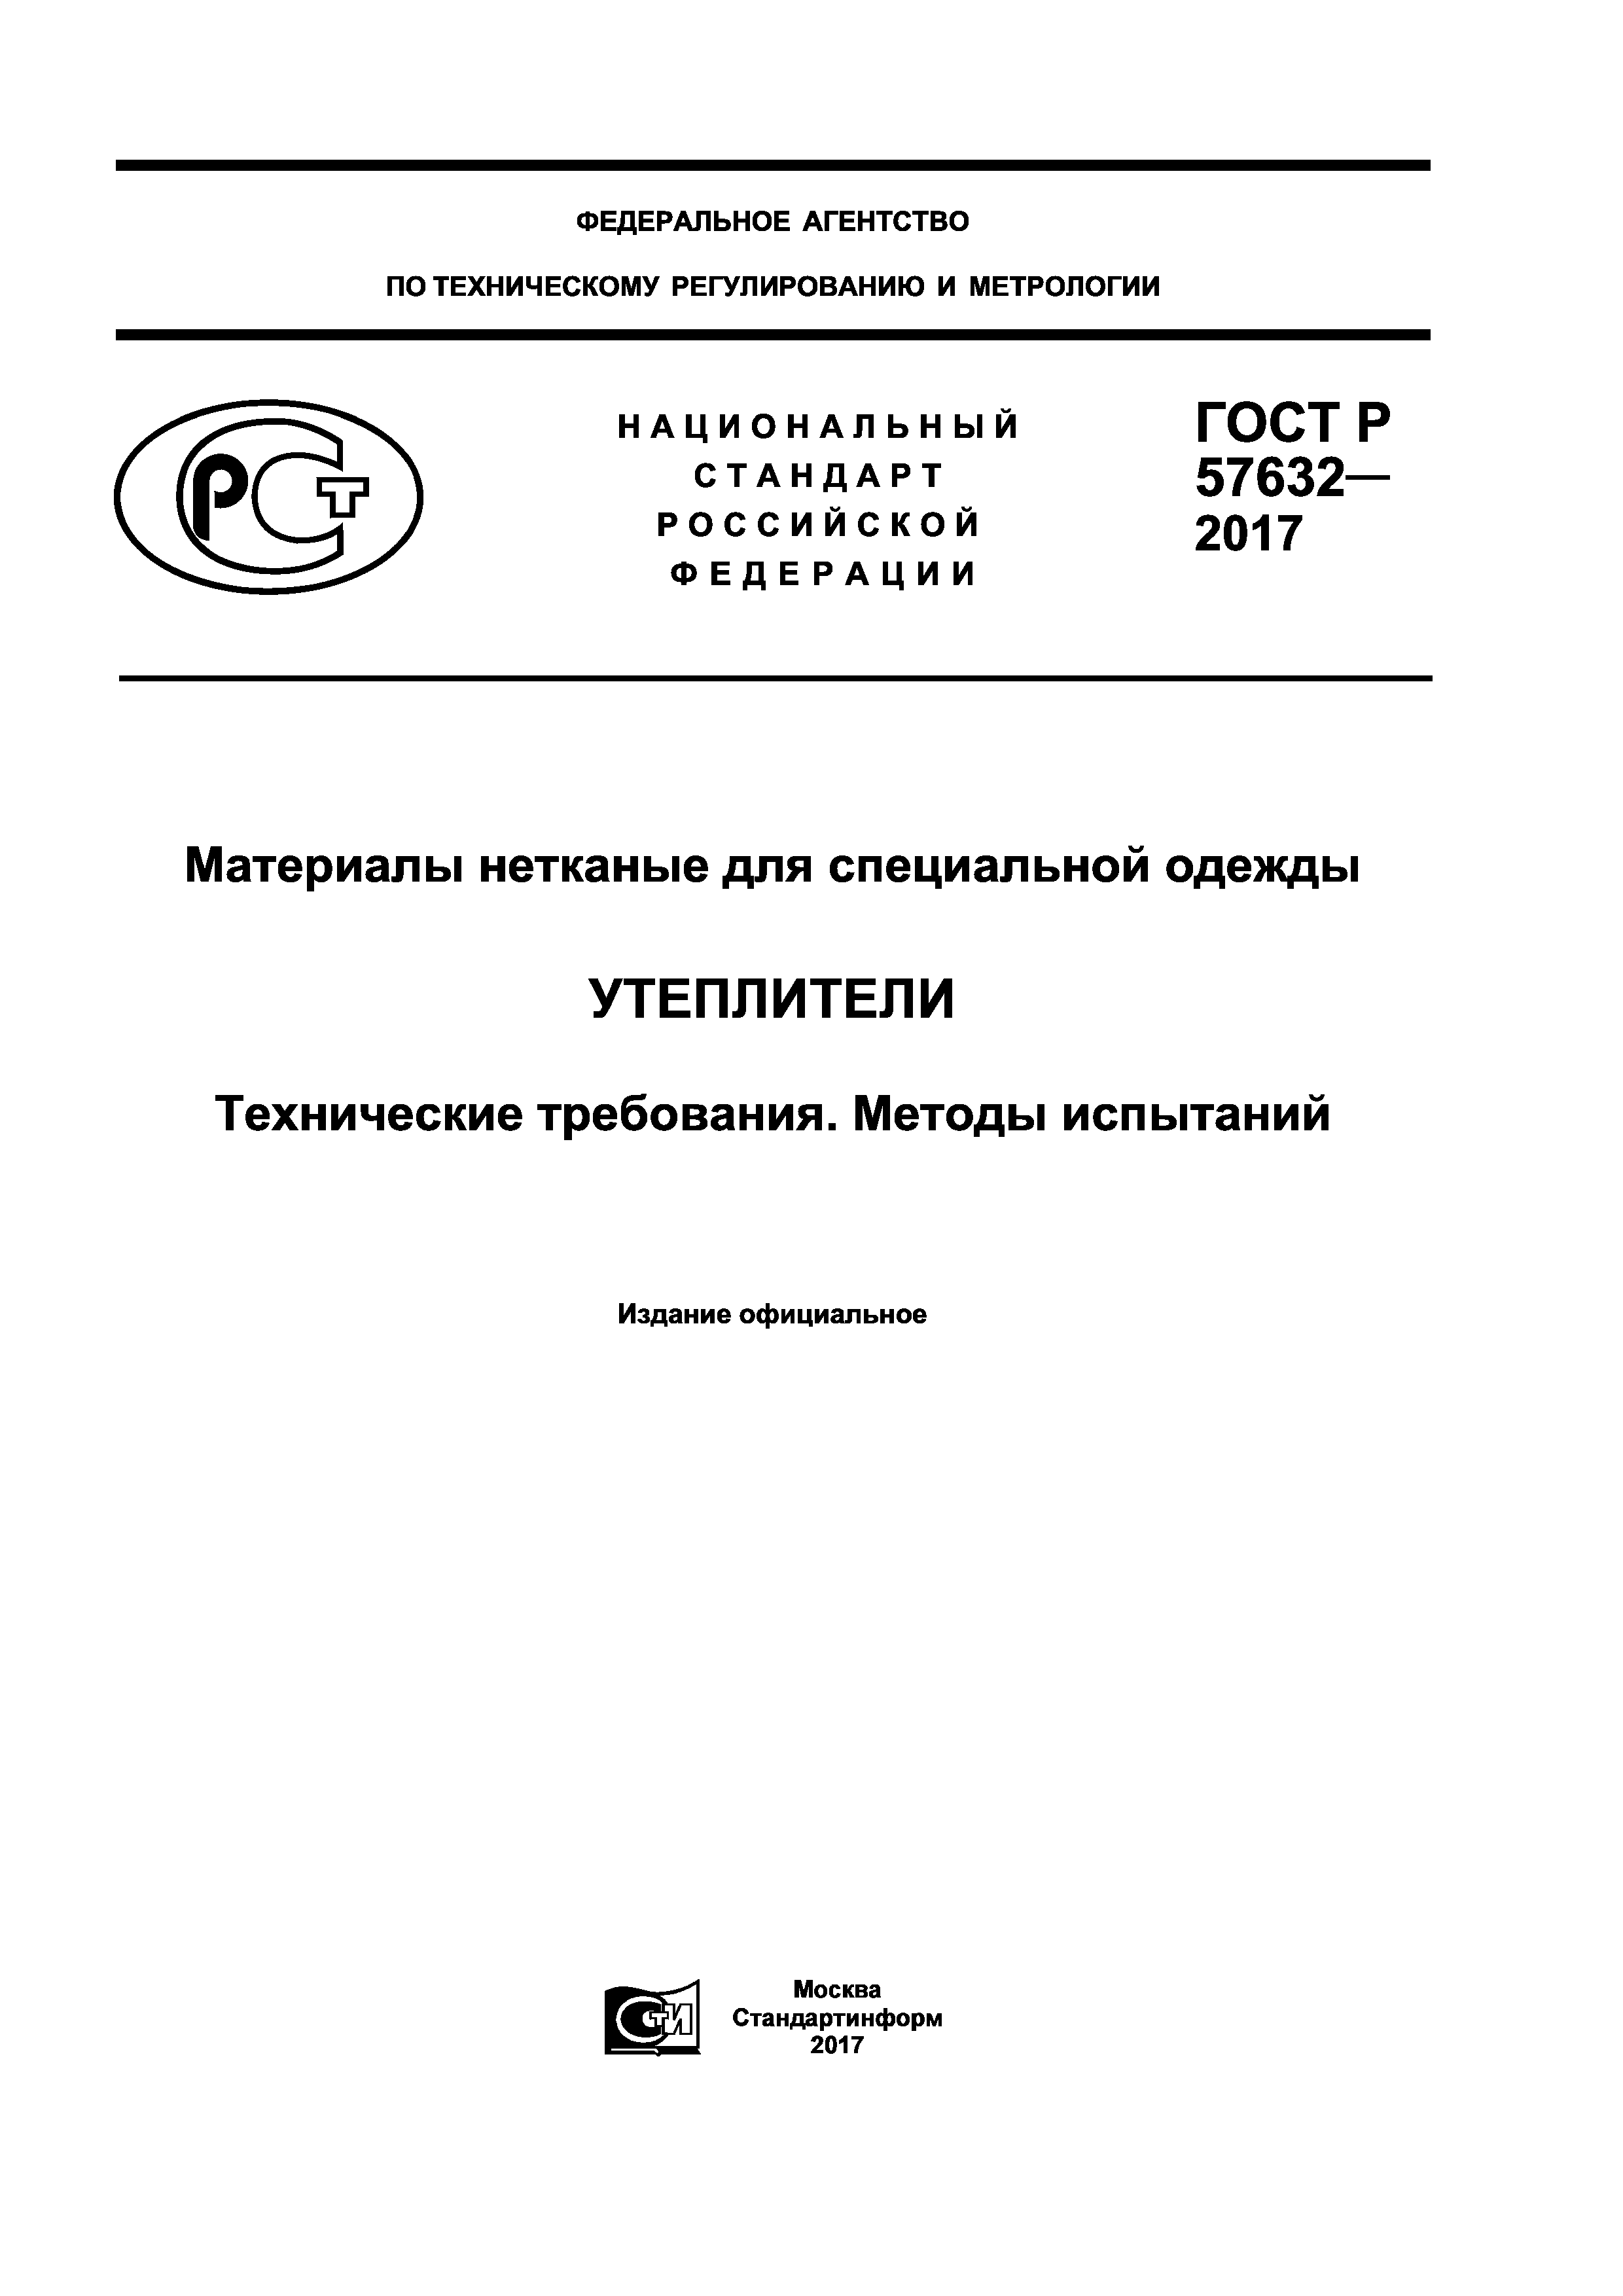 ГОСТ Р 57632-2017